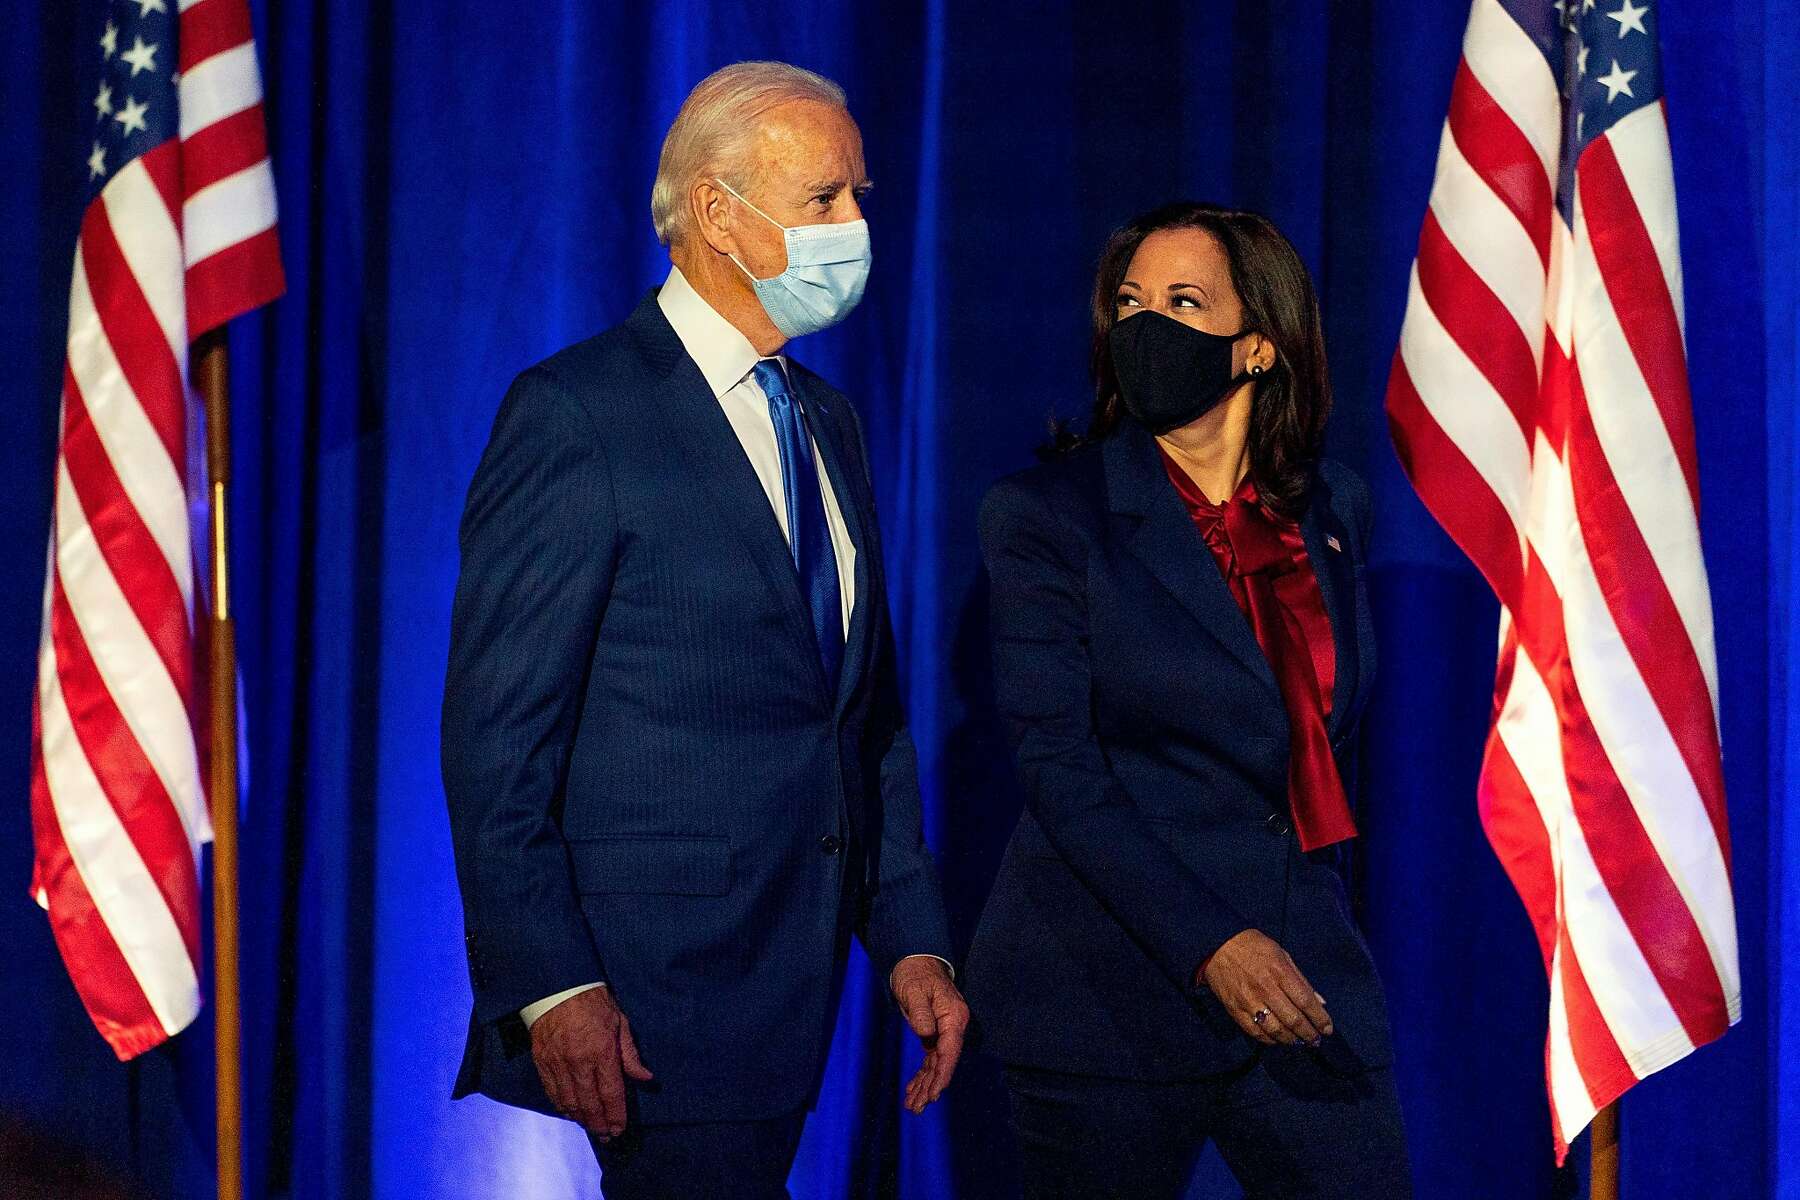 6 Pcs/set 46th US President Biden Harris Buttons 2020-Joe Biden & Kamala Harris 